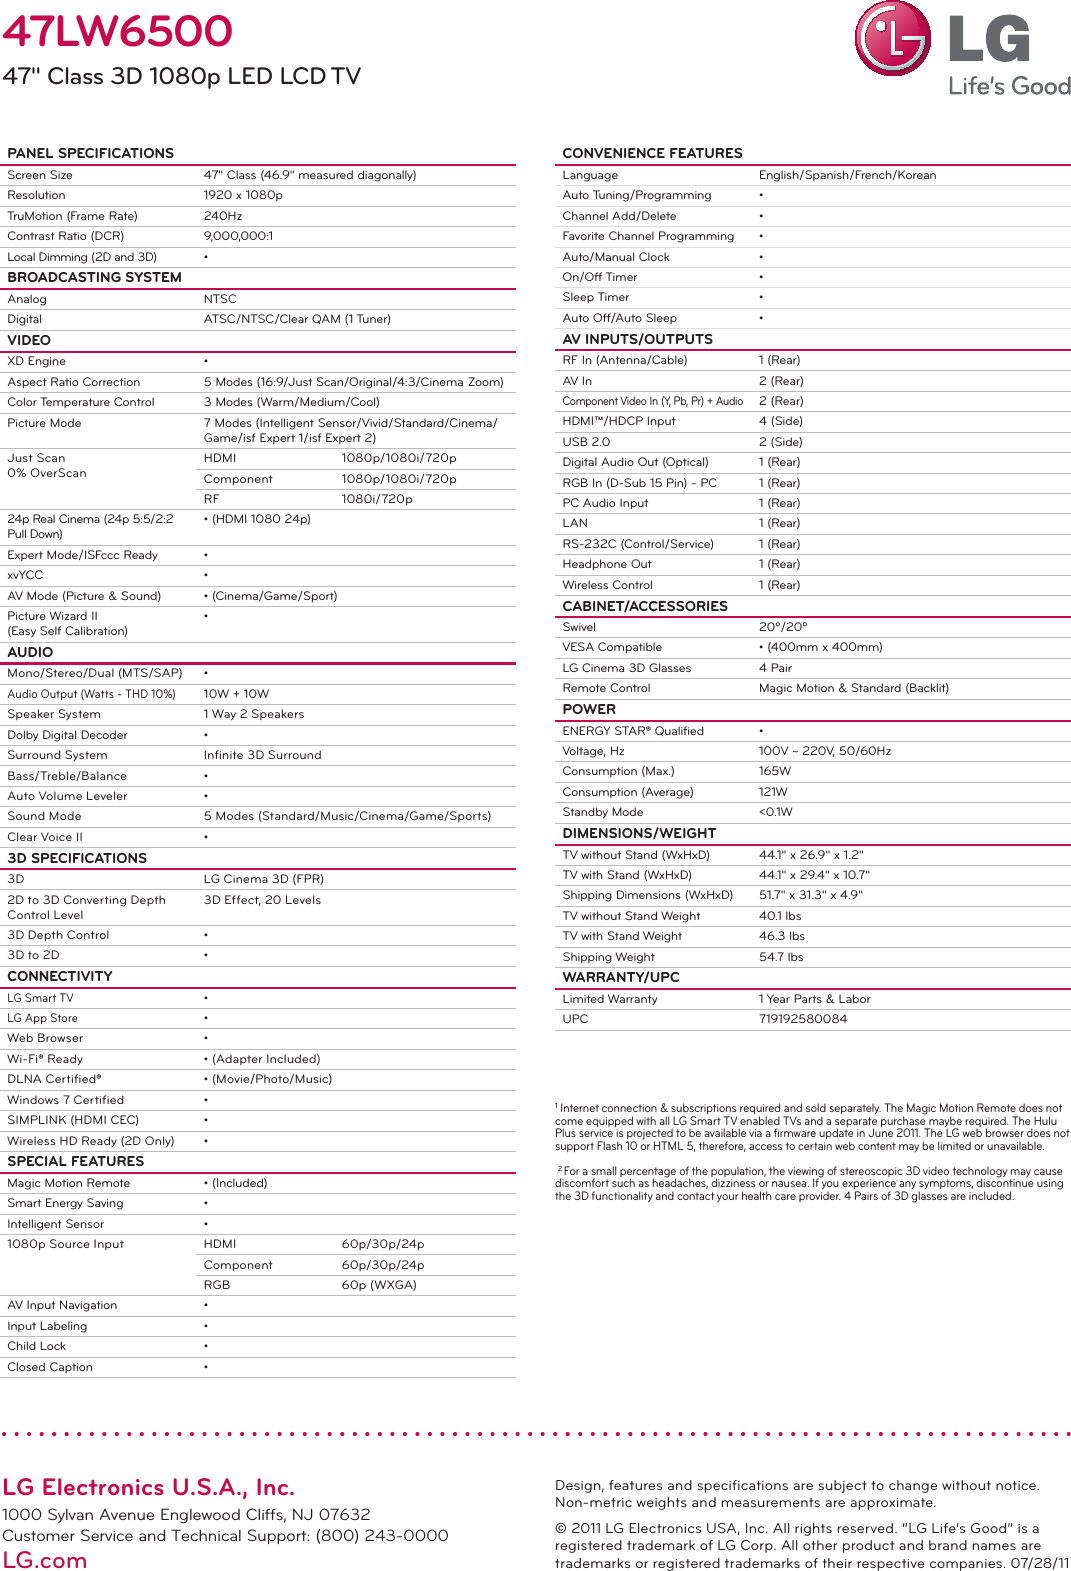 Page 2 of 2 - LG 47LW6500 User Manual Specification Spec Sheet V2.0